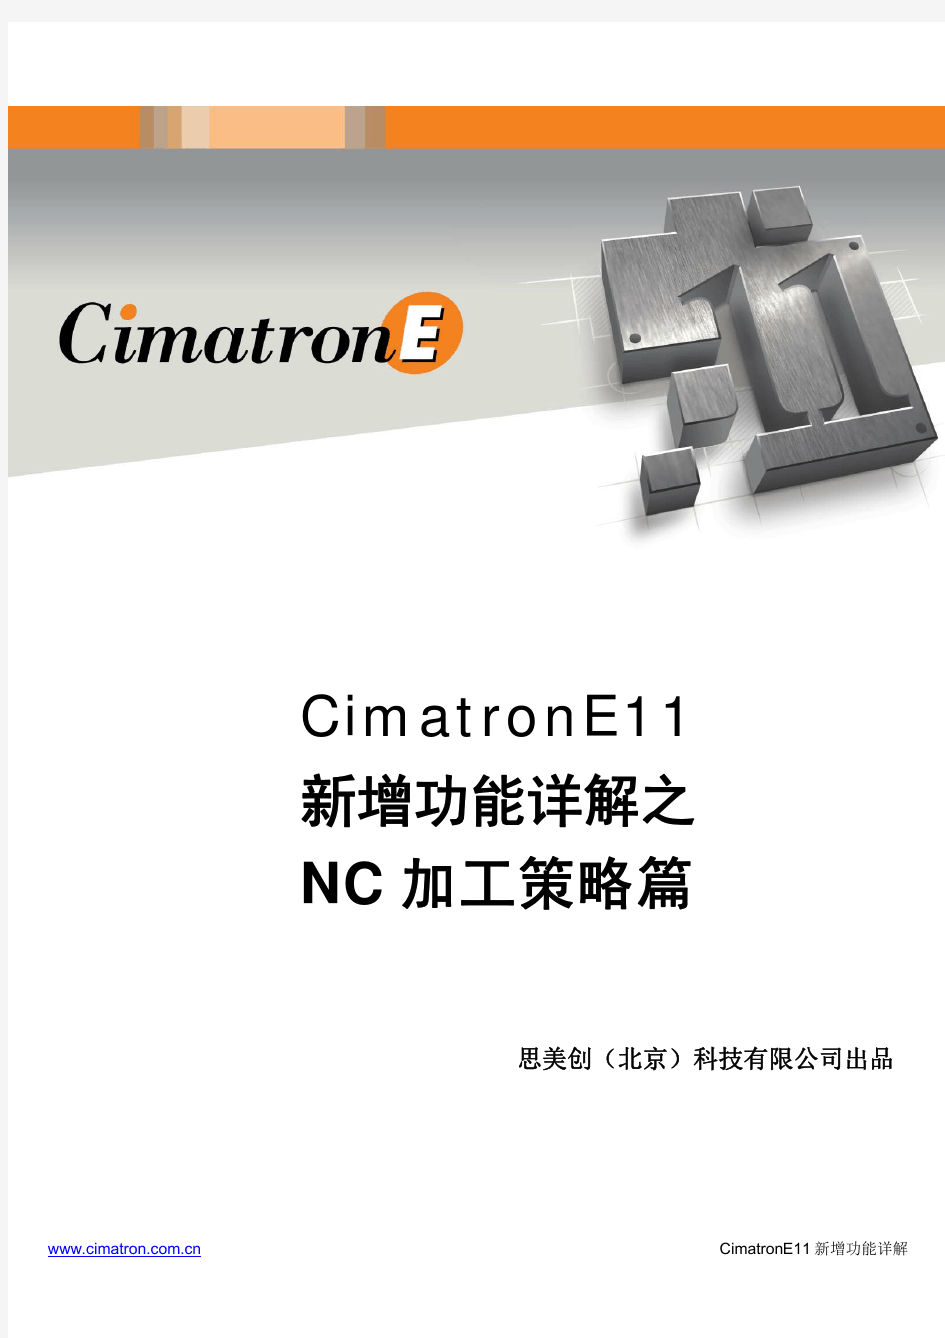 CimatronE11 NC策略